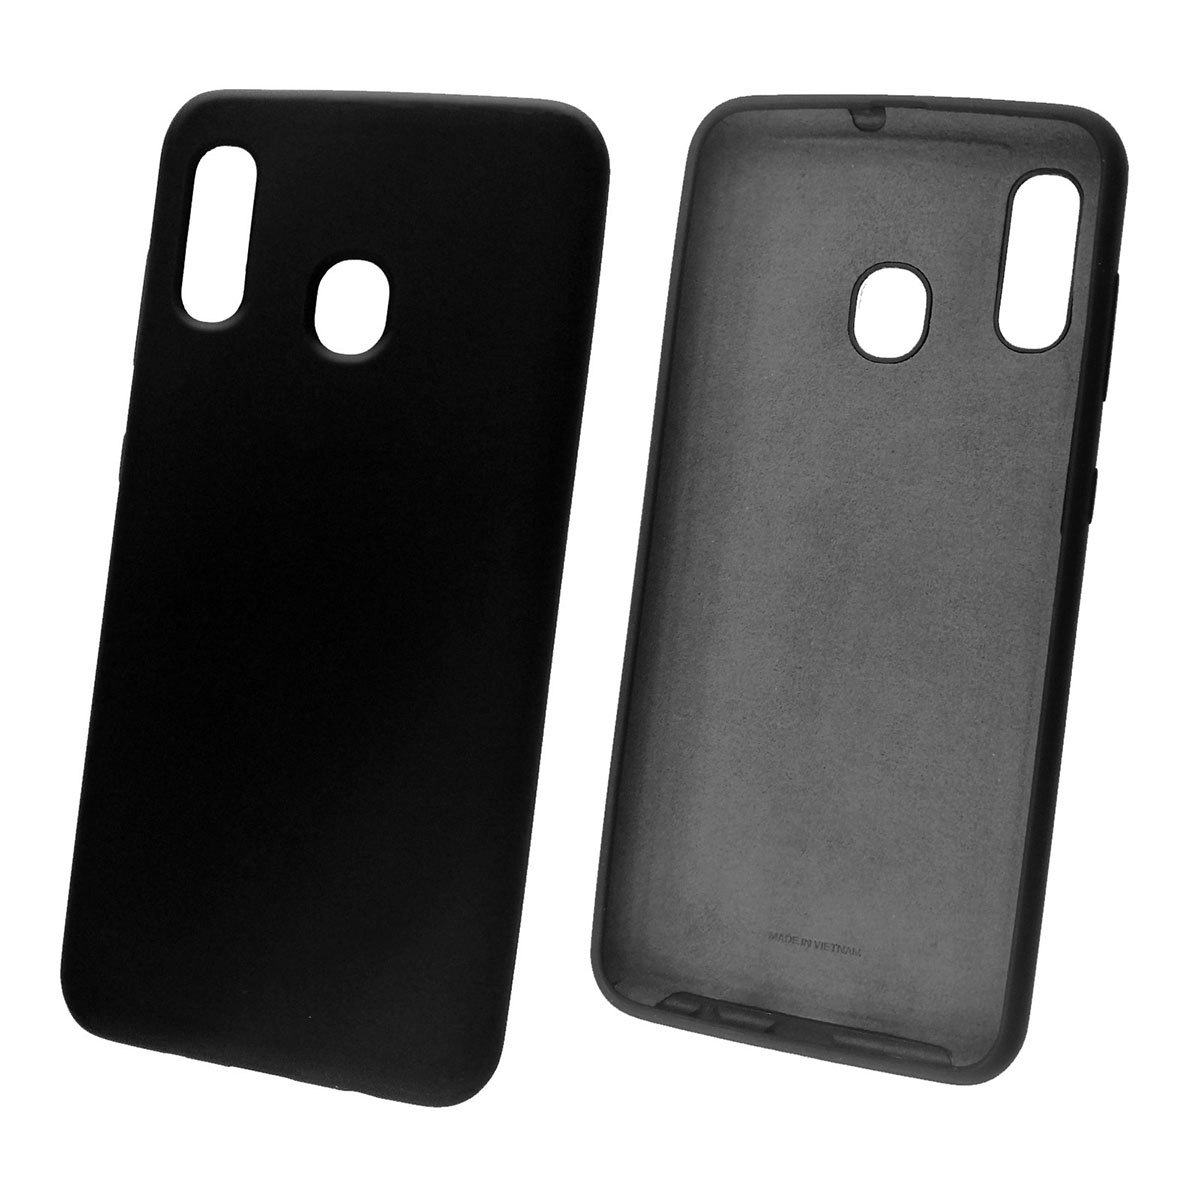 Чехол накладка Silicon Cover для SAMSUNG Galaxy A30 (SM-A305), силикон, бархат, цвет черный.